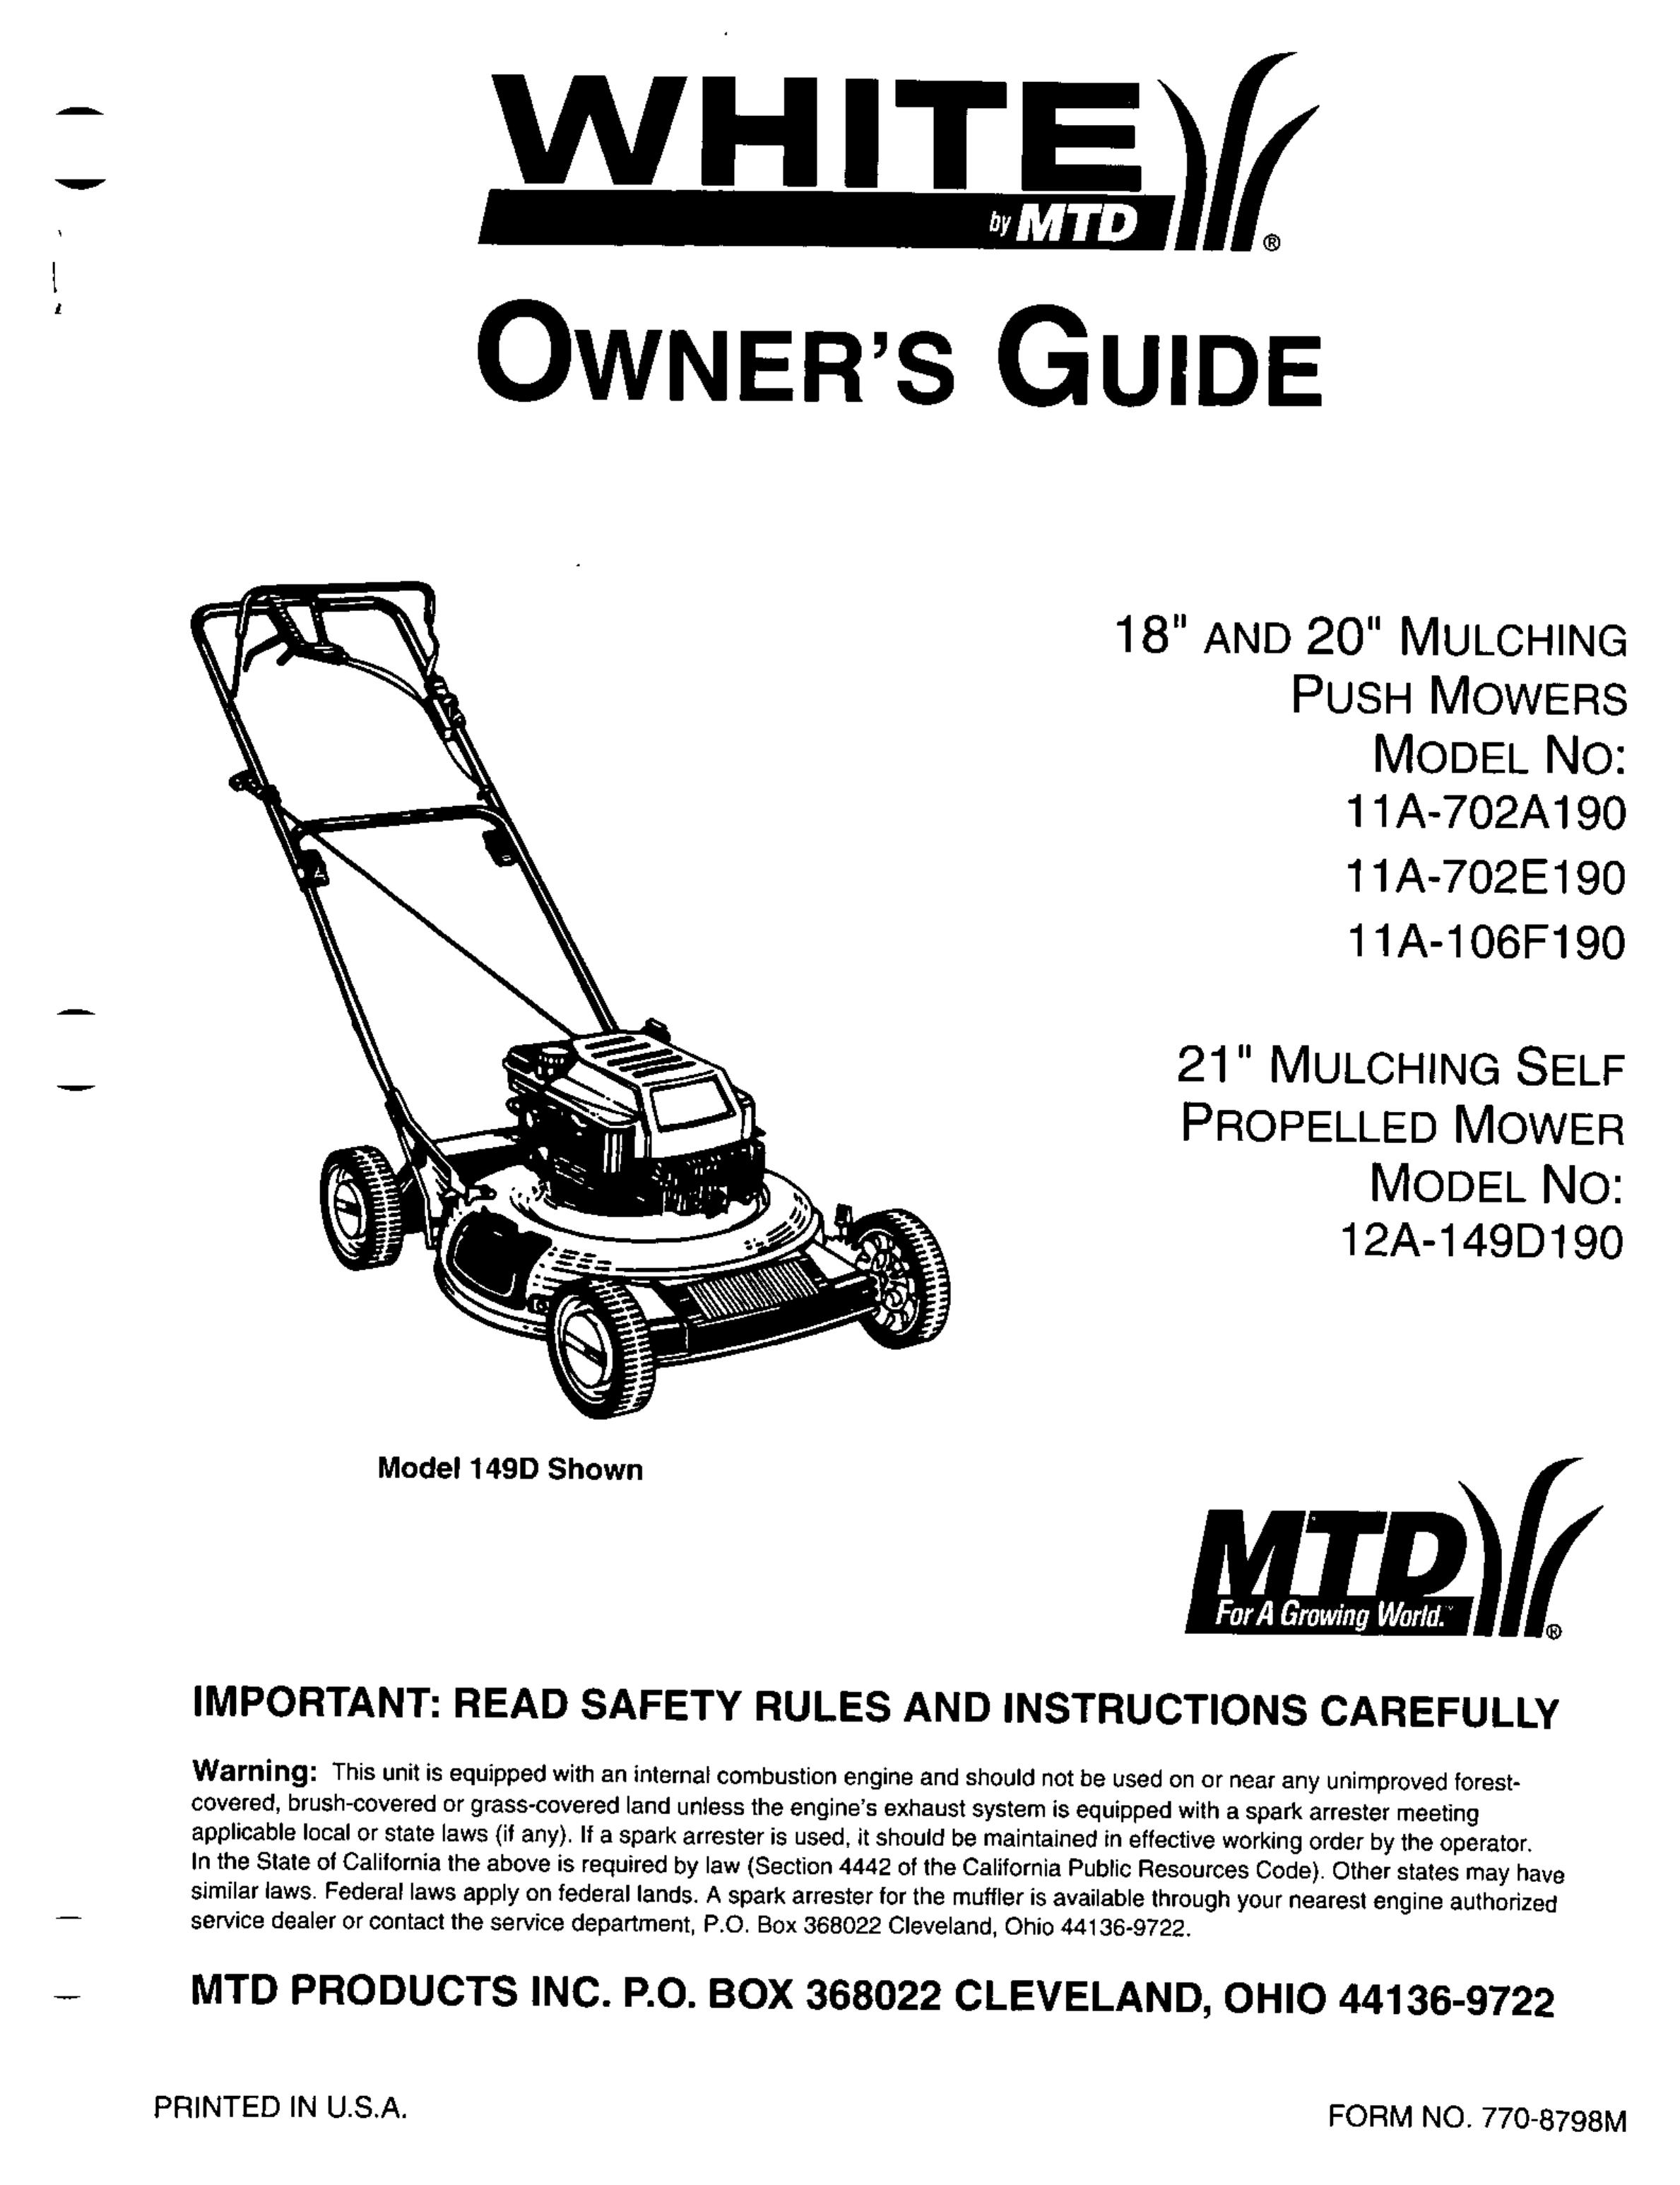 White 11A-702E190 Lawn Mower User Manual